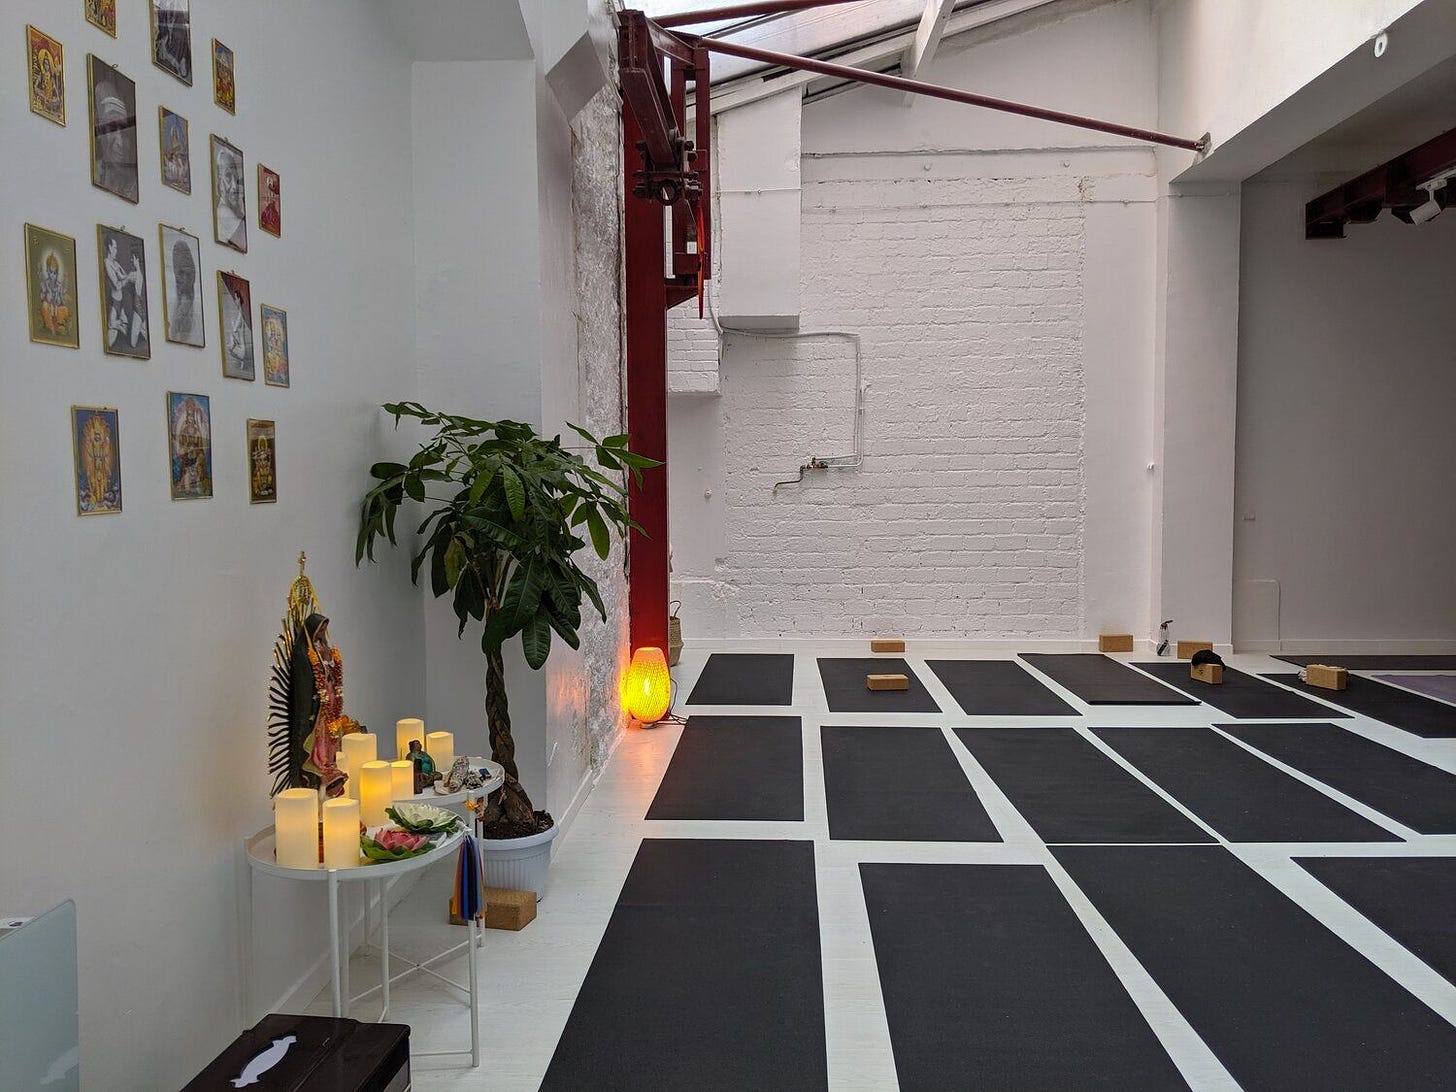 MAYASHALA yoga studio in Paris, France